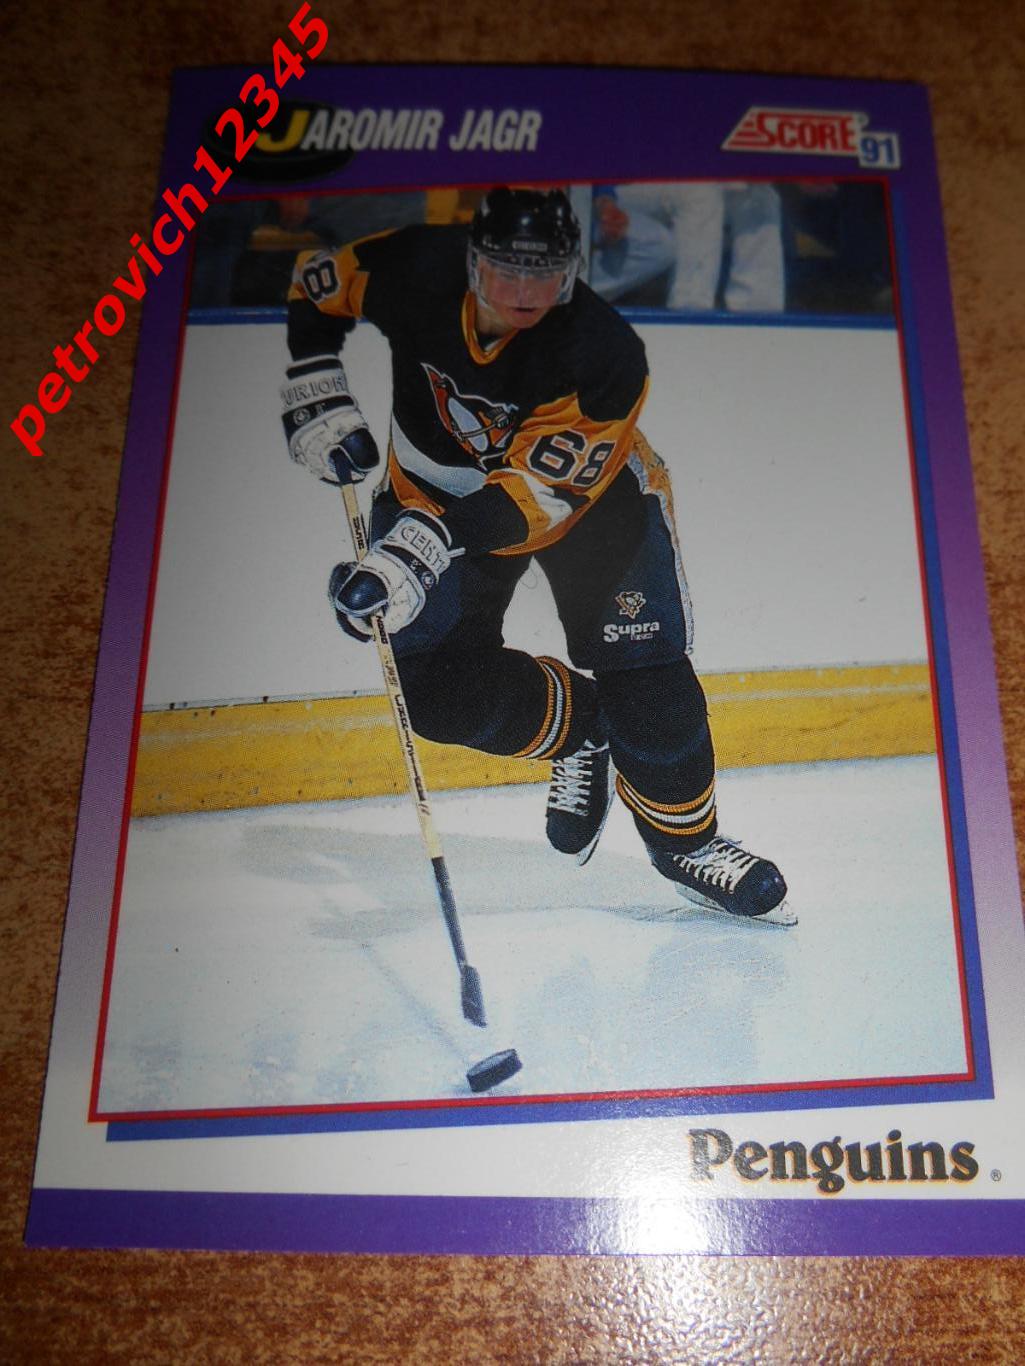 хоккей.карточка = 98 - Jaromir Jagr - Pittsburgh Penguins